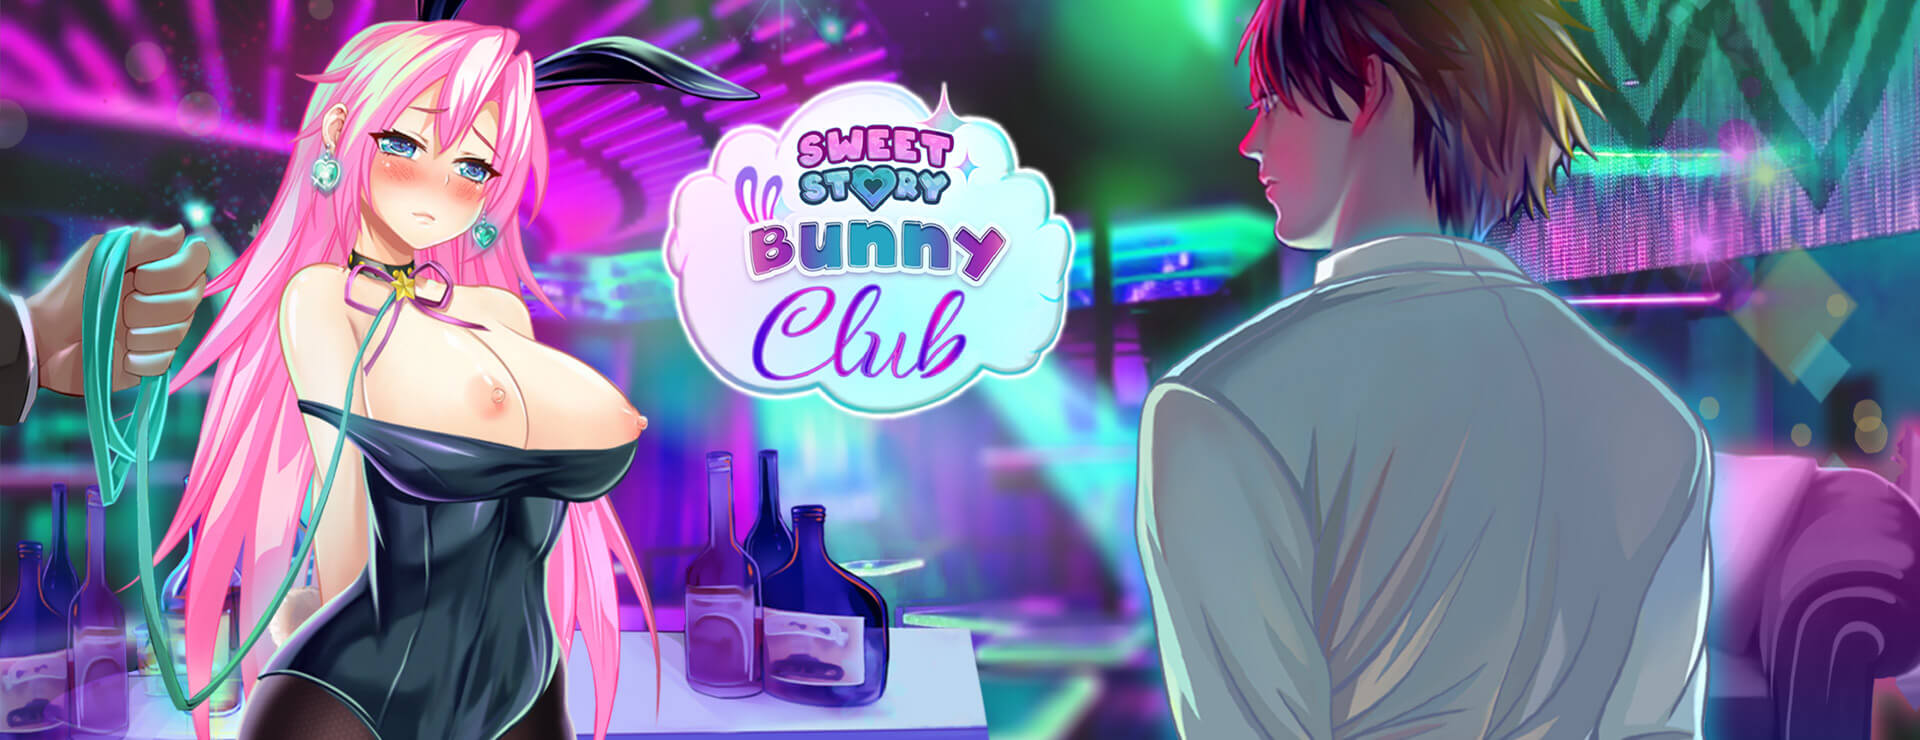 Sweet Story Bunny Club - Casual Juego